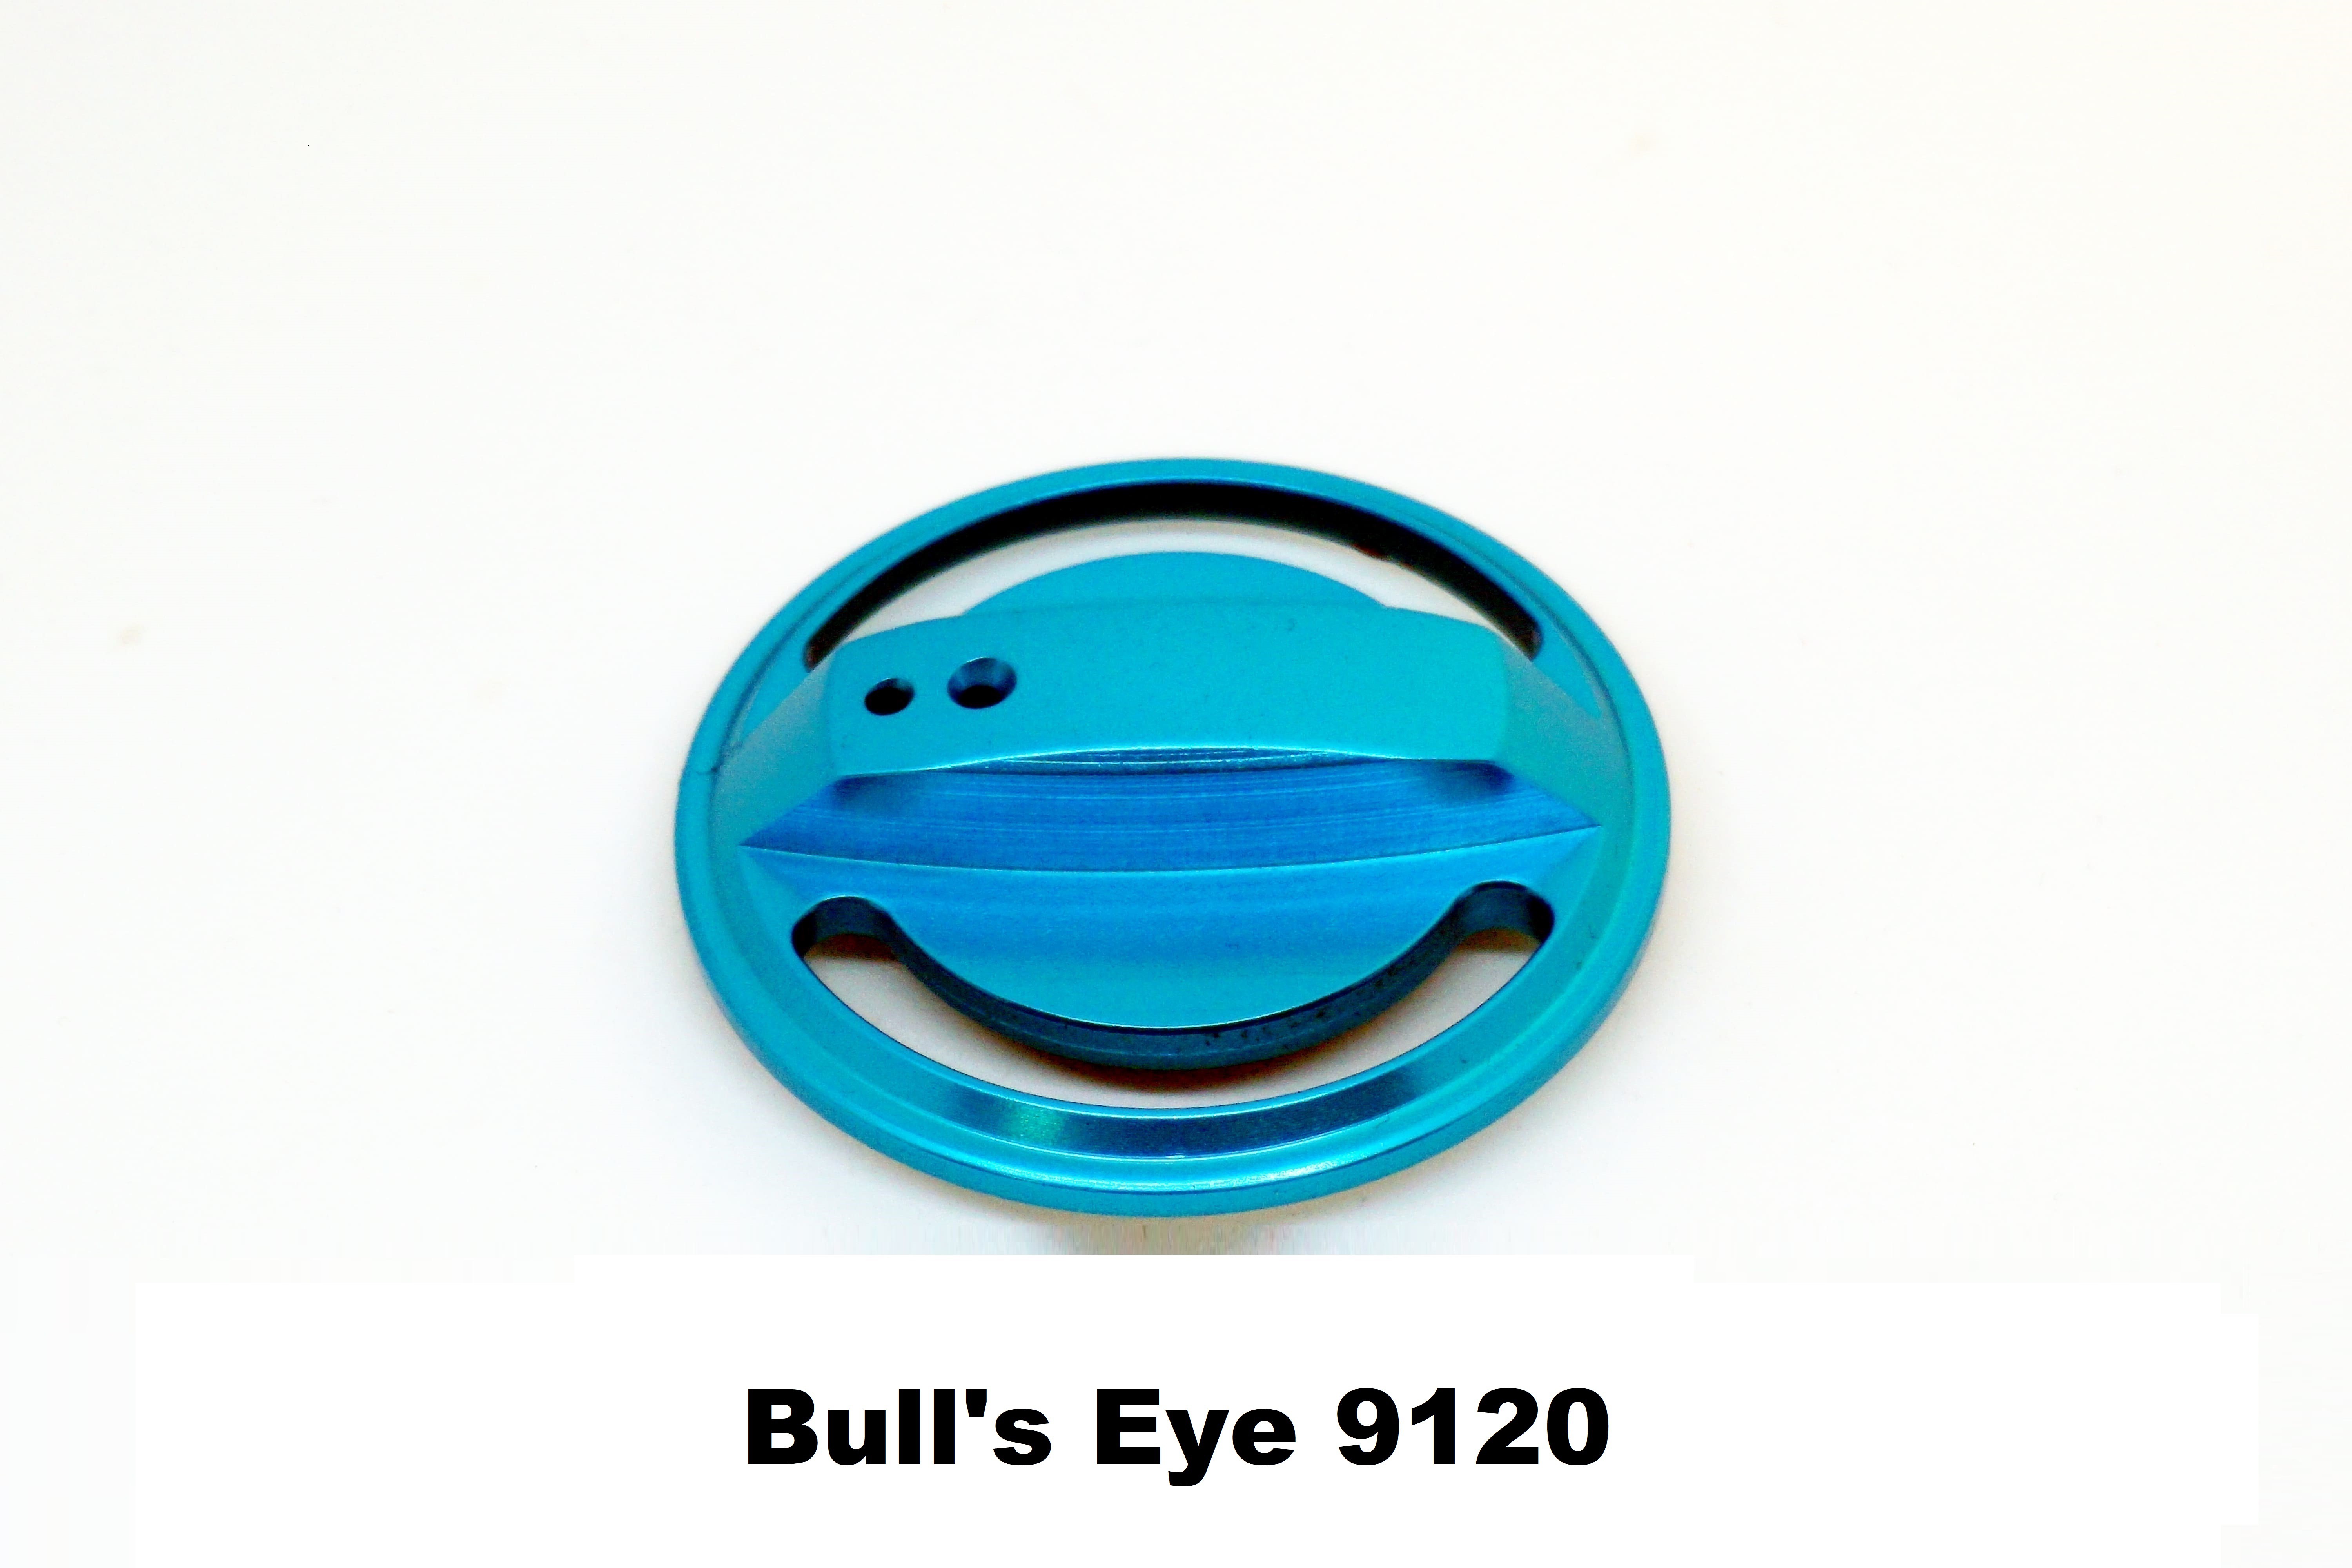 Bouchon de Fren Bull's Eye 9120